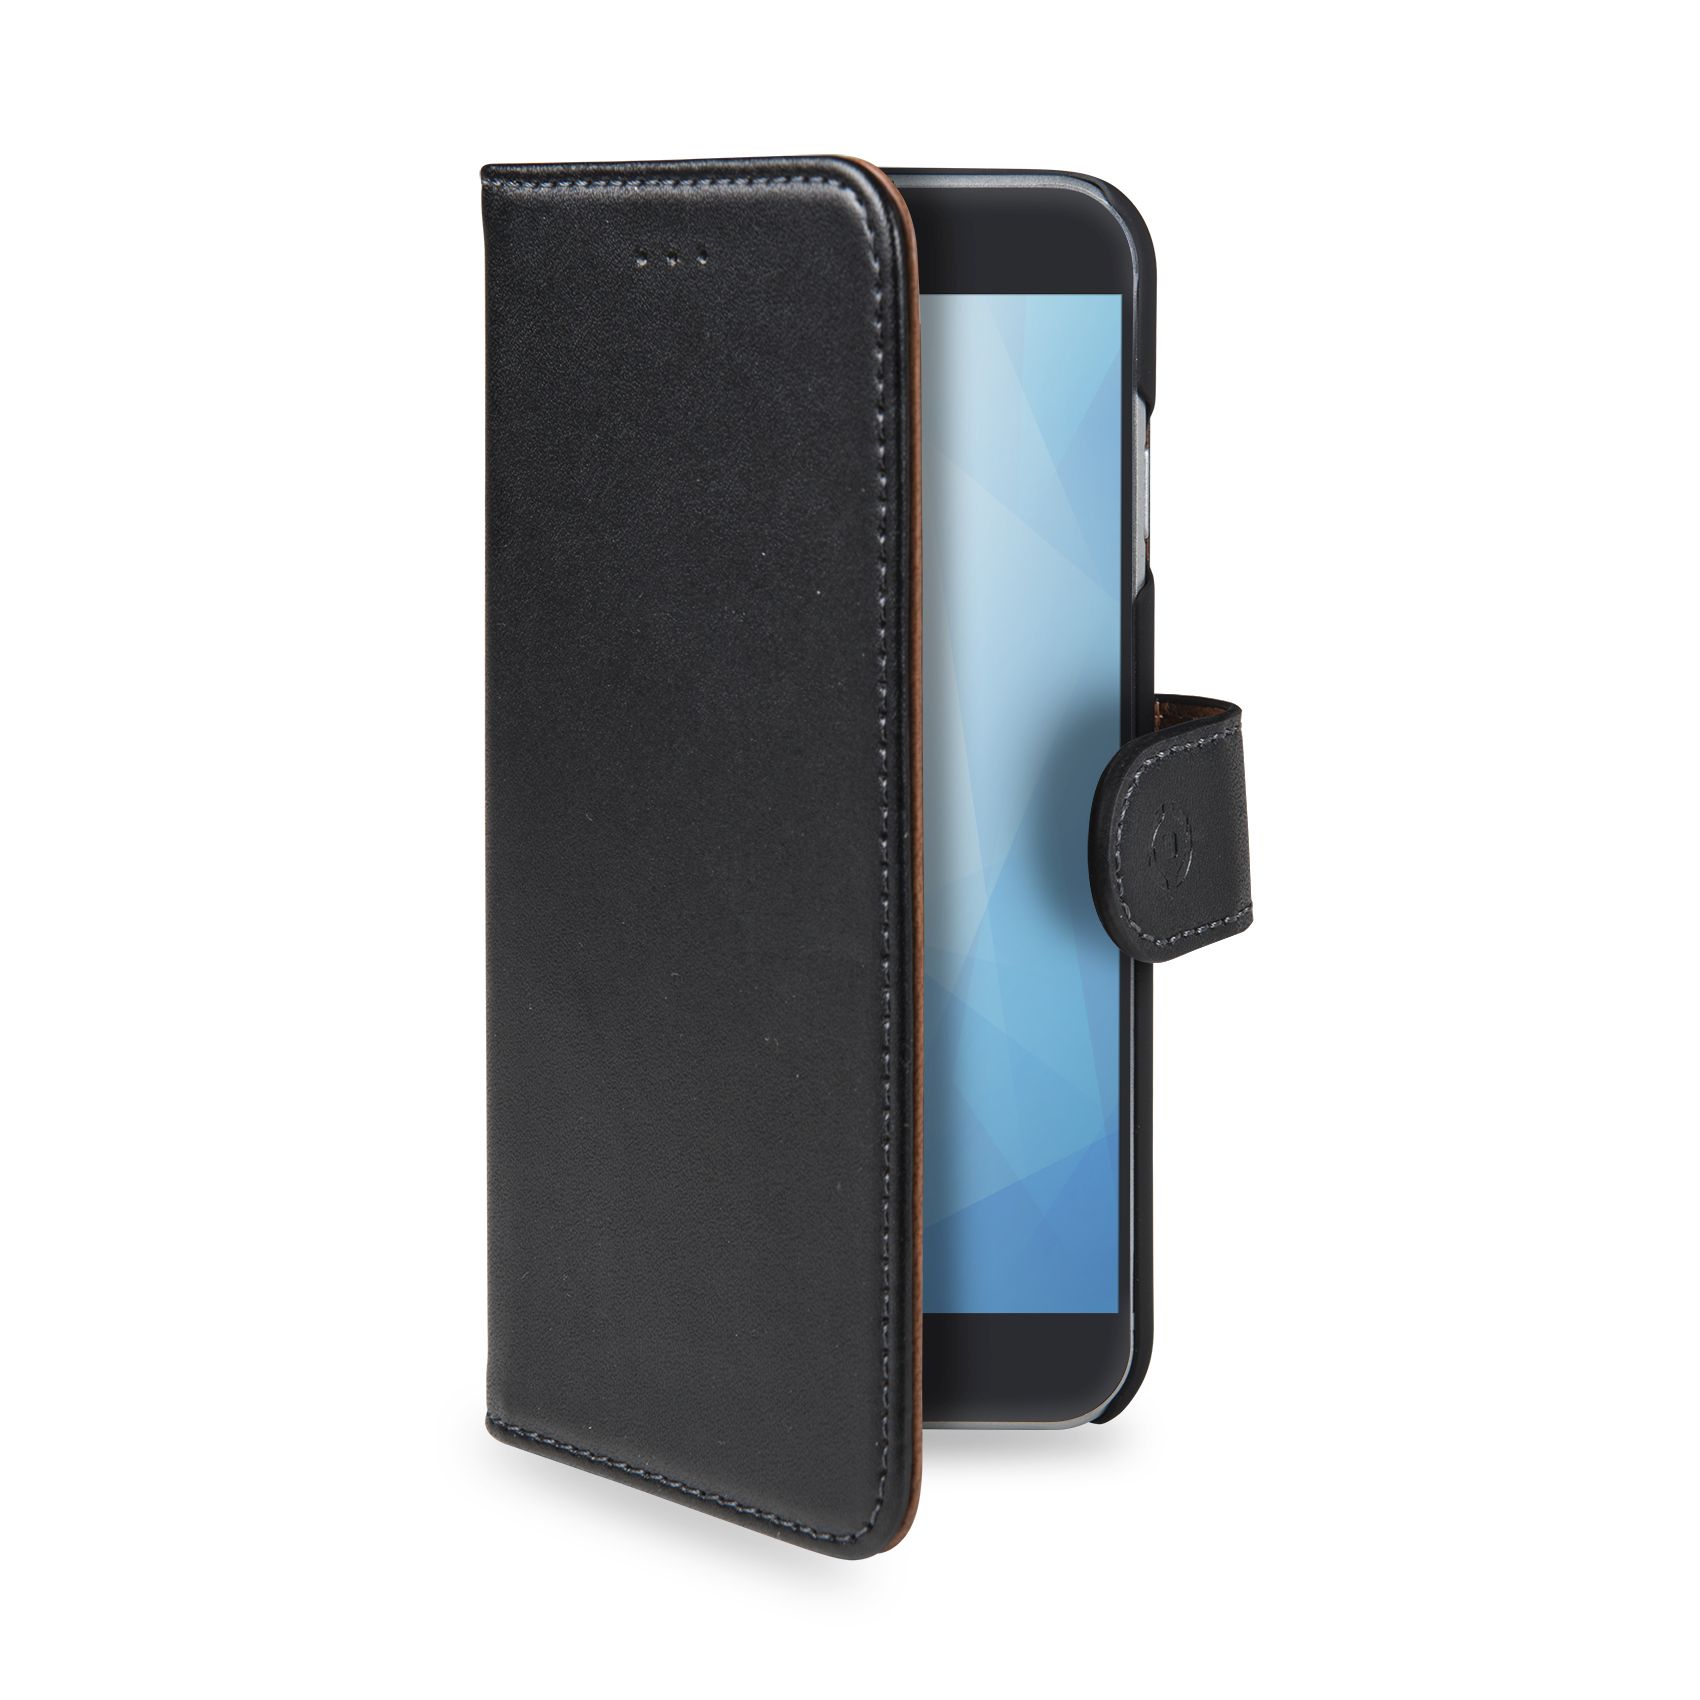 Puzdro typu kniha Wallet pre Samsung Galaxy J6 (2018), čierne